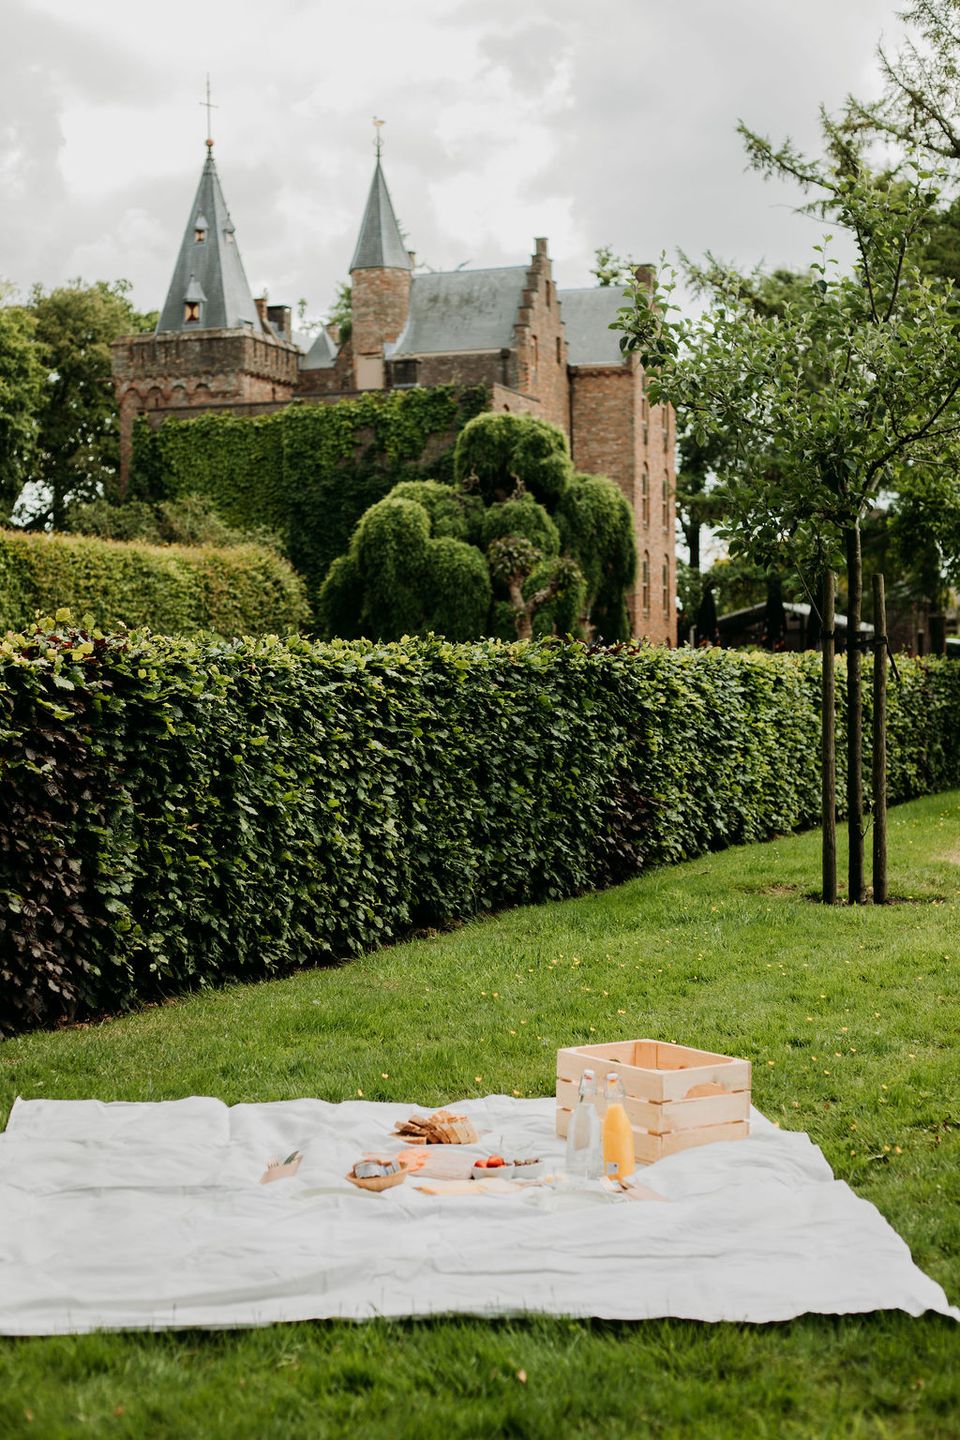 Picknick in de kasteeltuin van Kasteel-Museum Sypesteyn